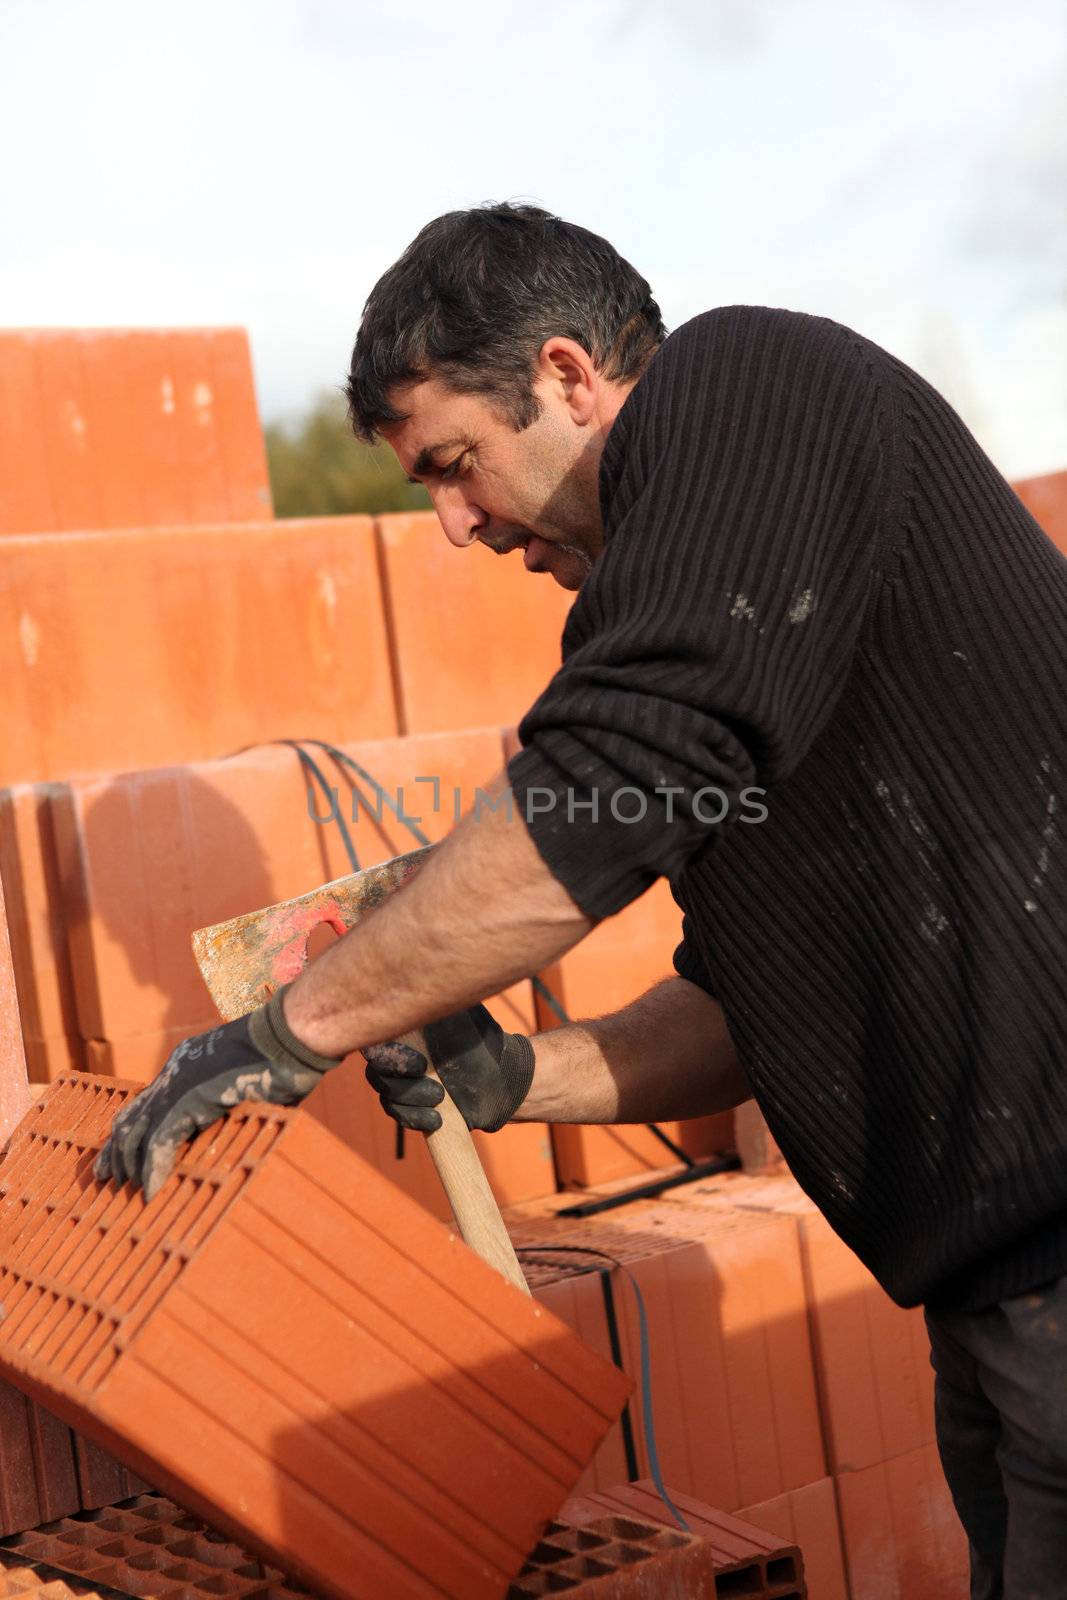 Mason making adjustments to brick by phovoir